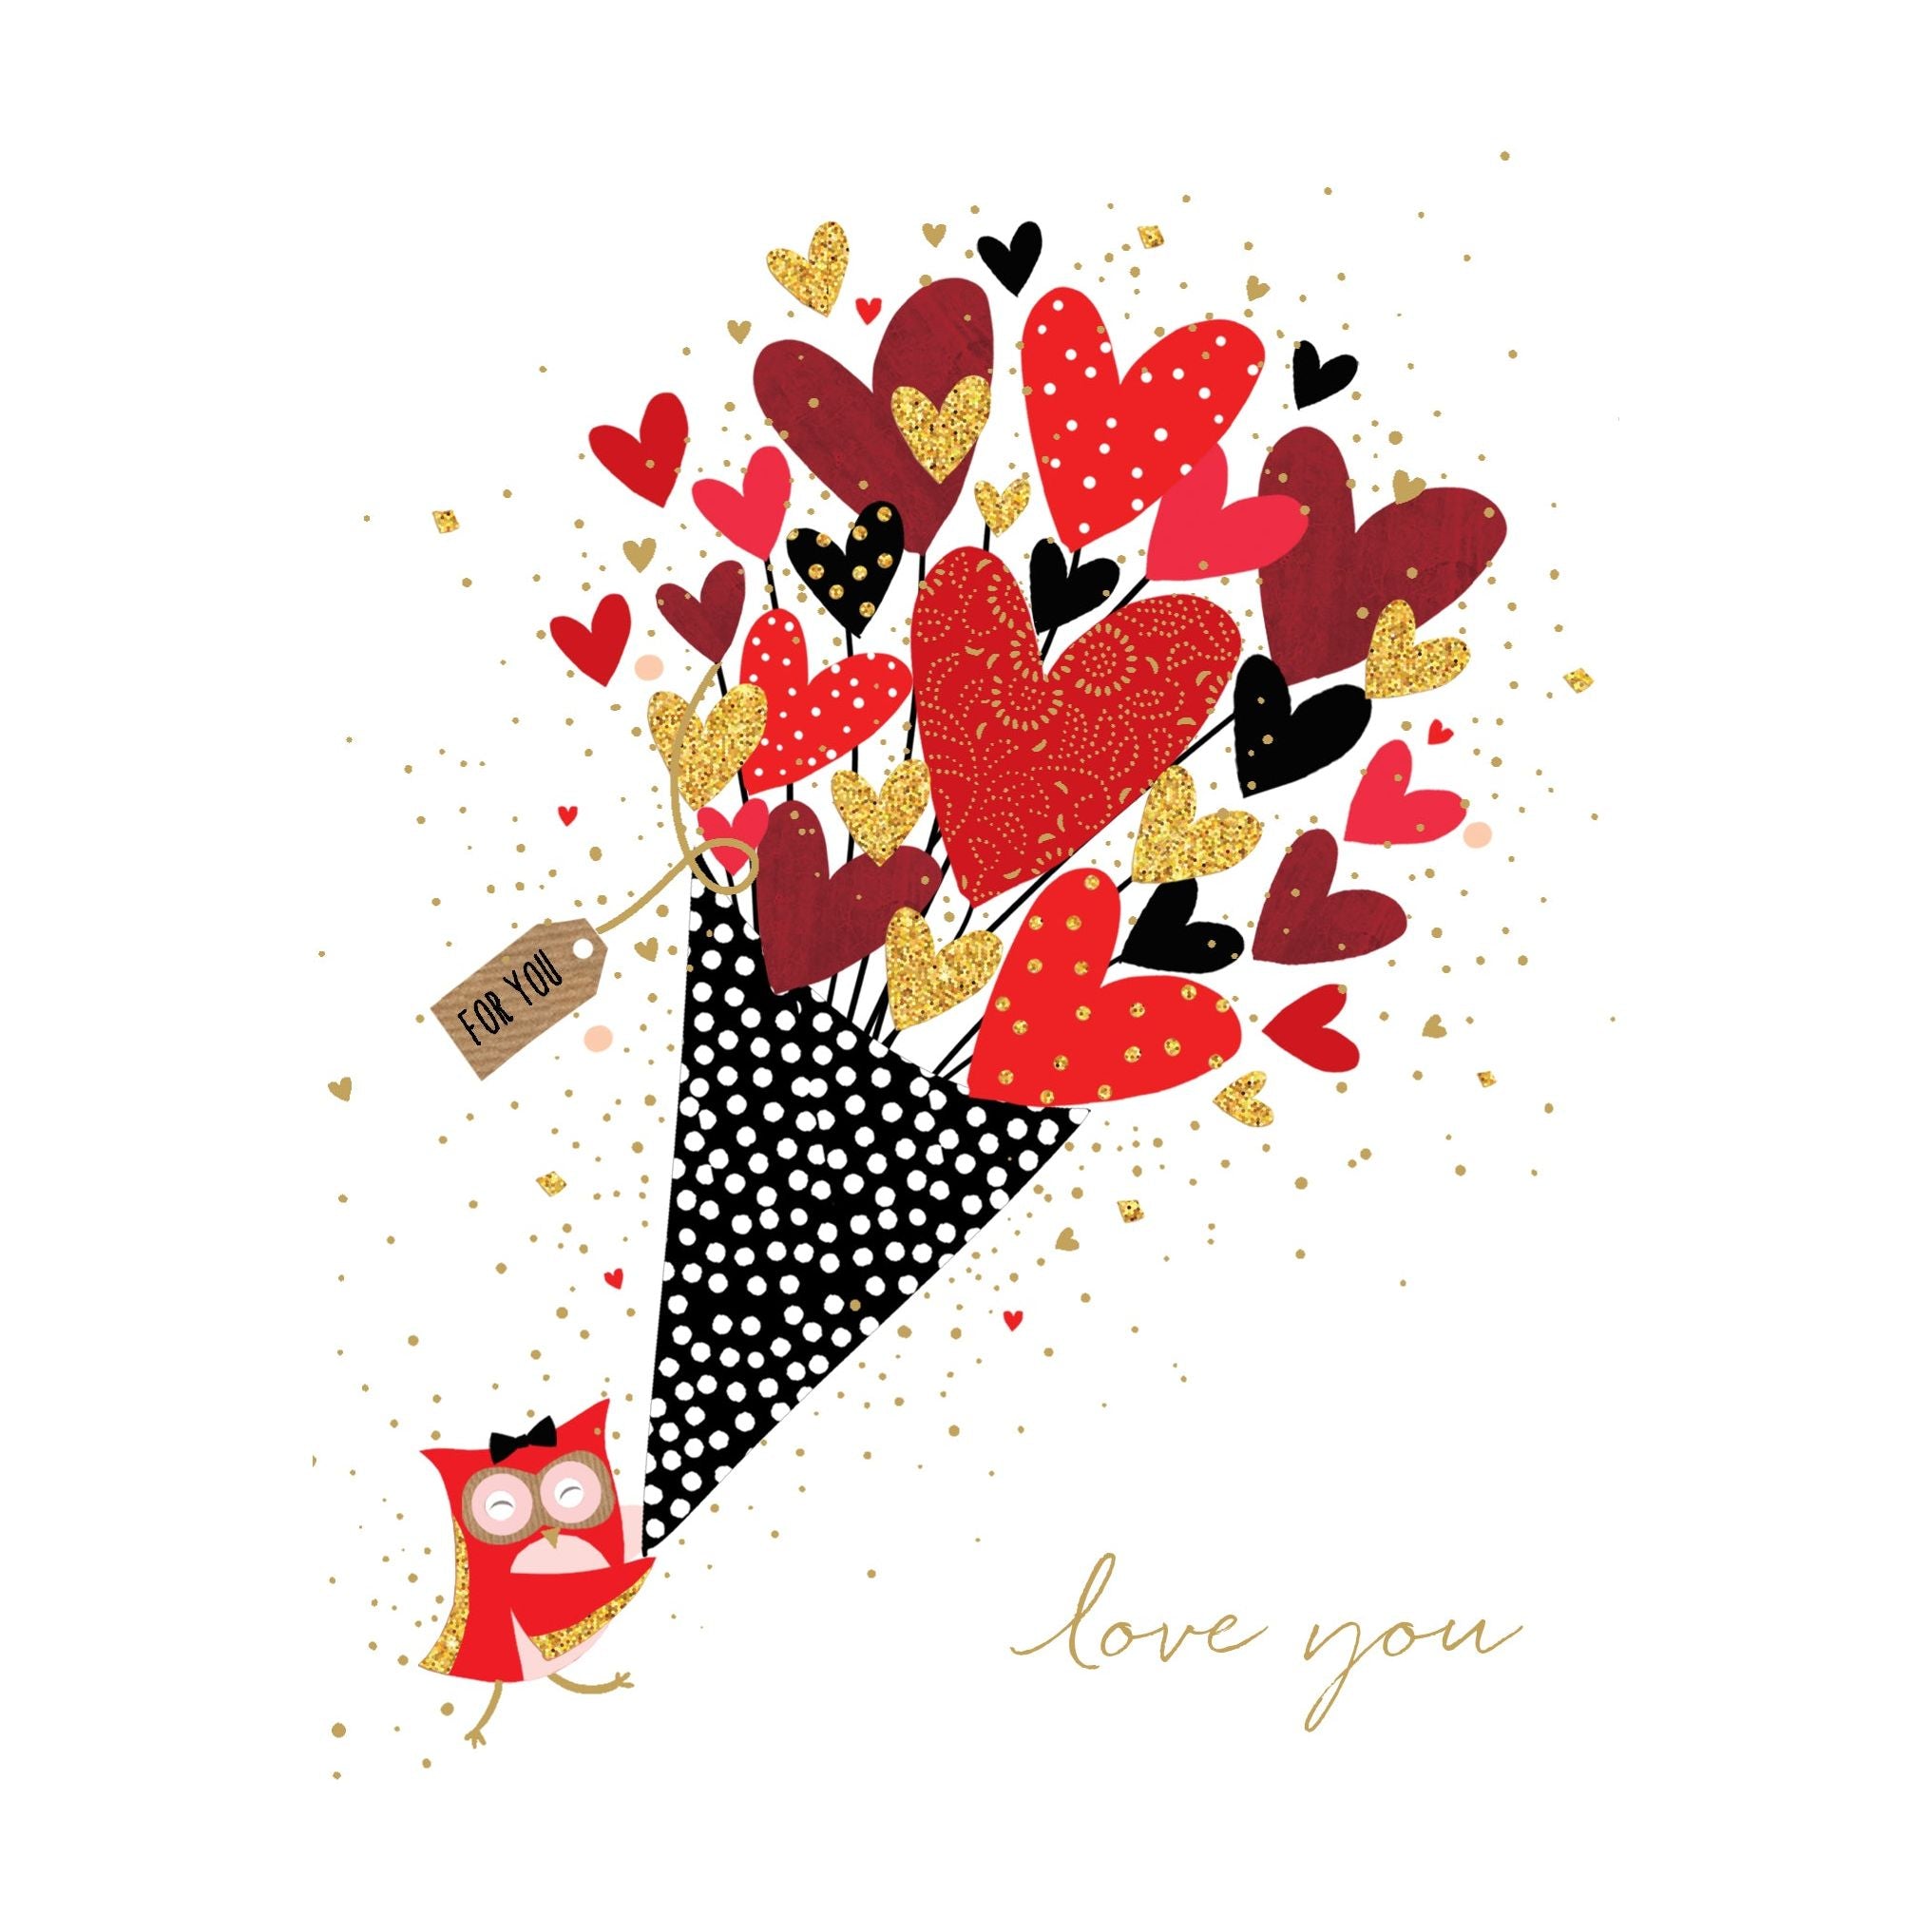 Owl Heart Bouquet Valentine's Card Sara Miller - Cardmore